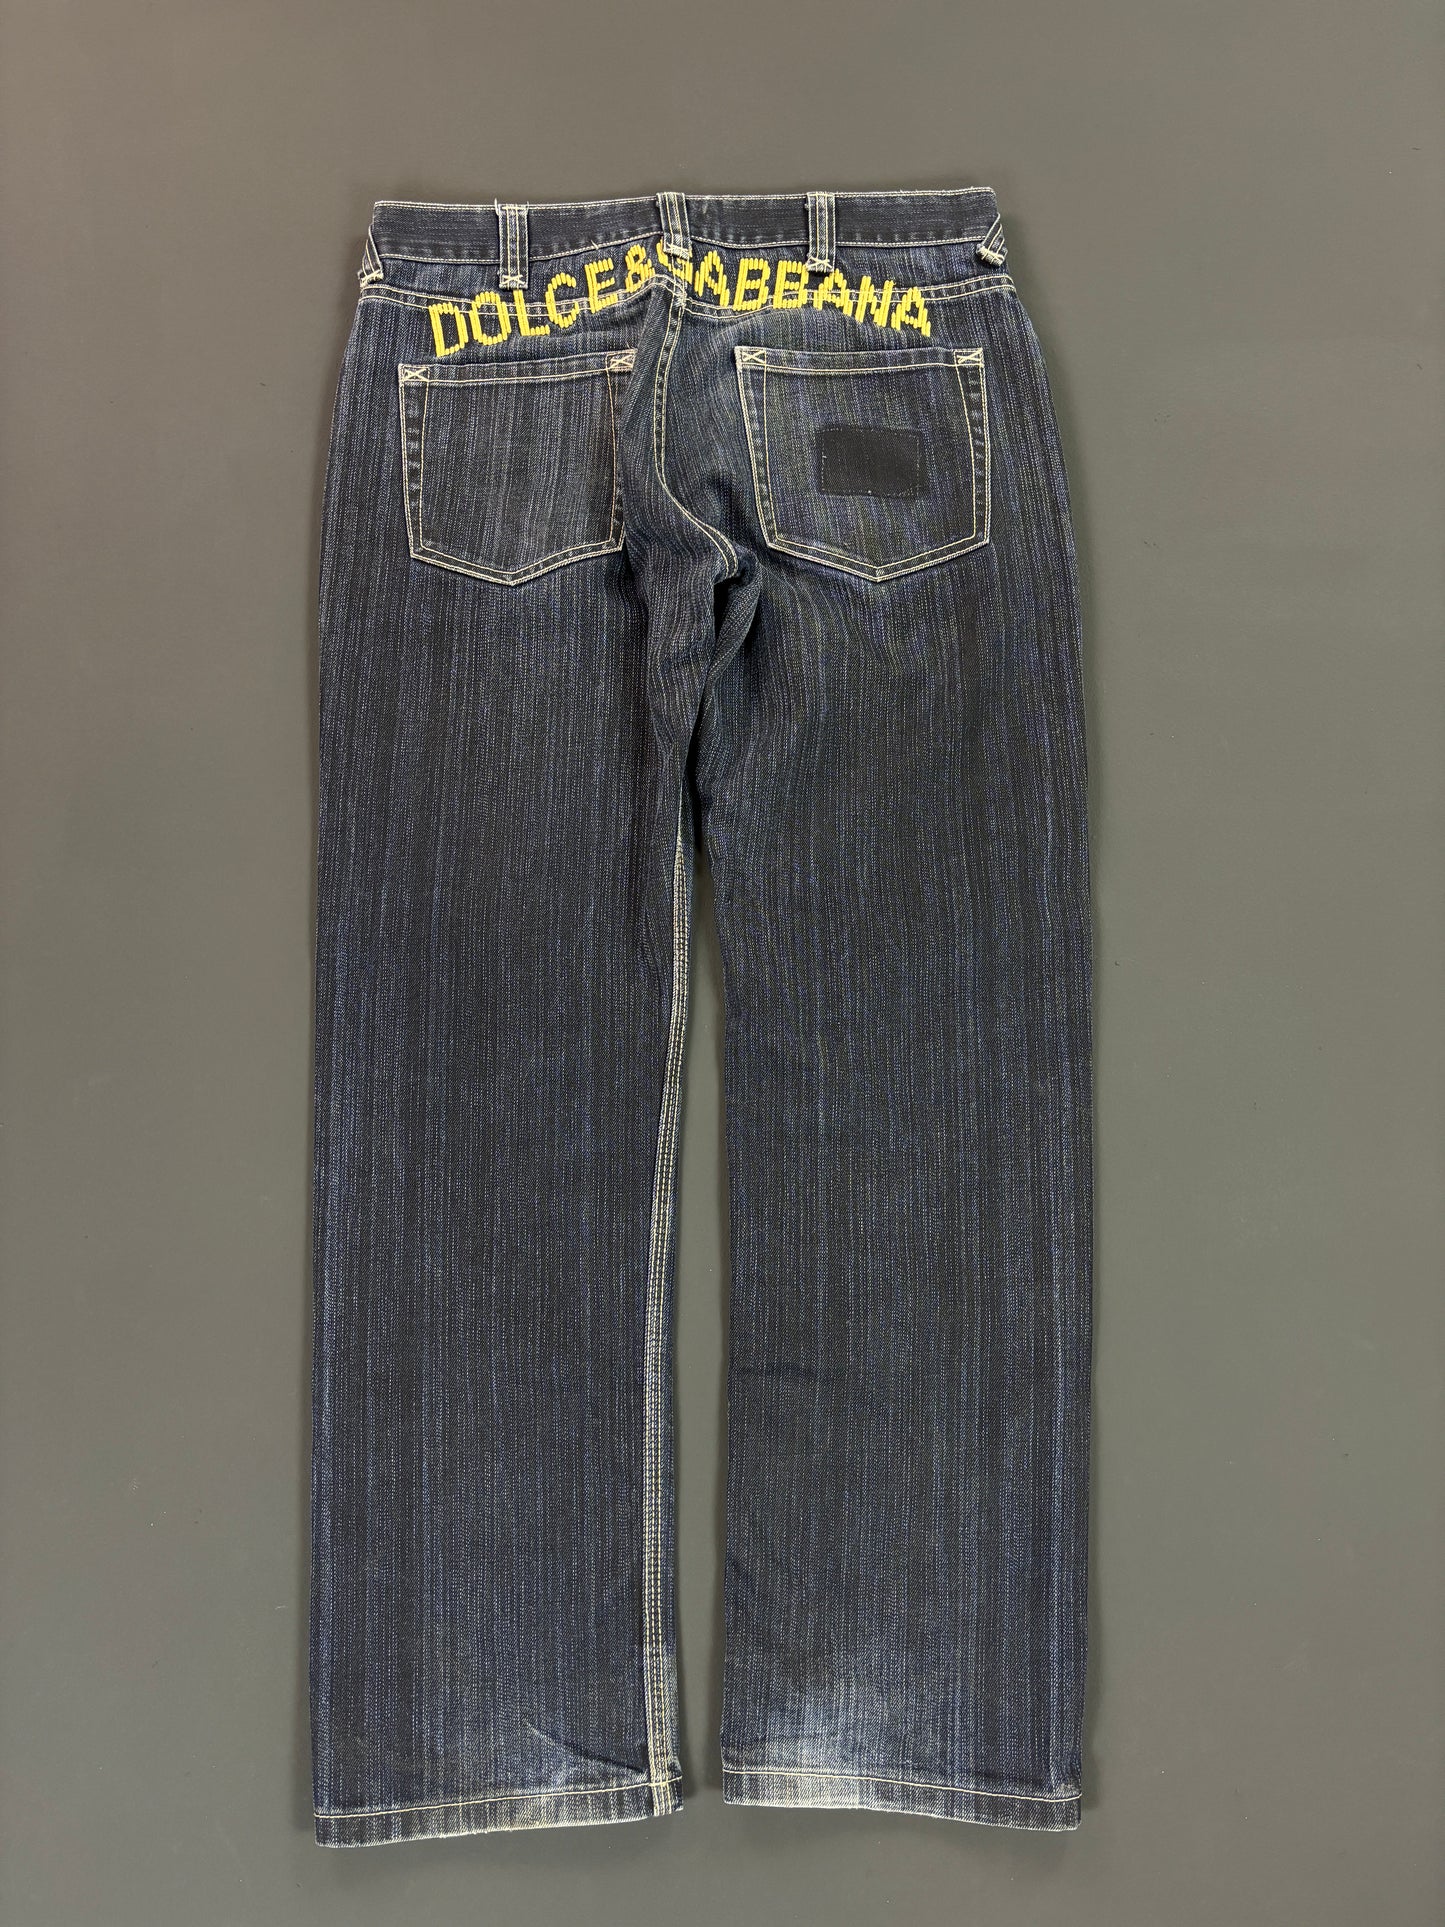 Dolce Gabbana Jeans L